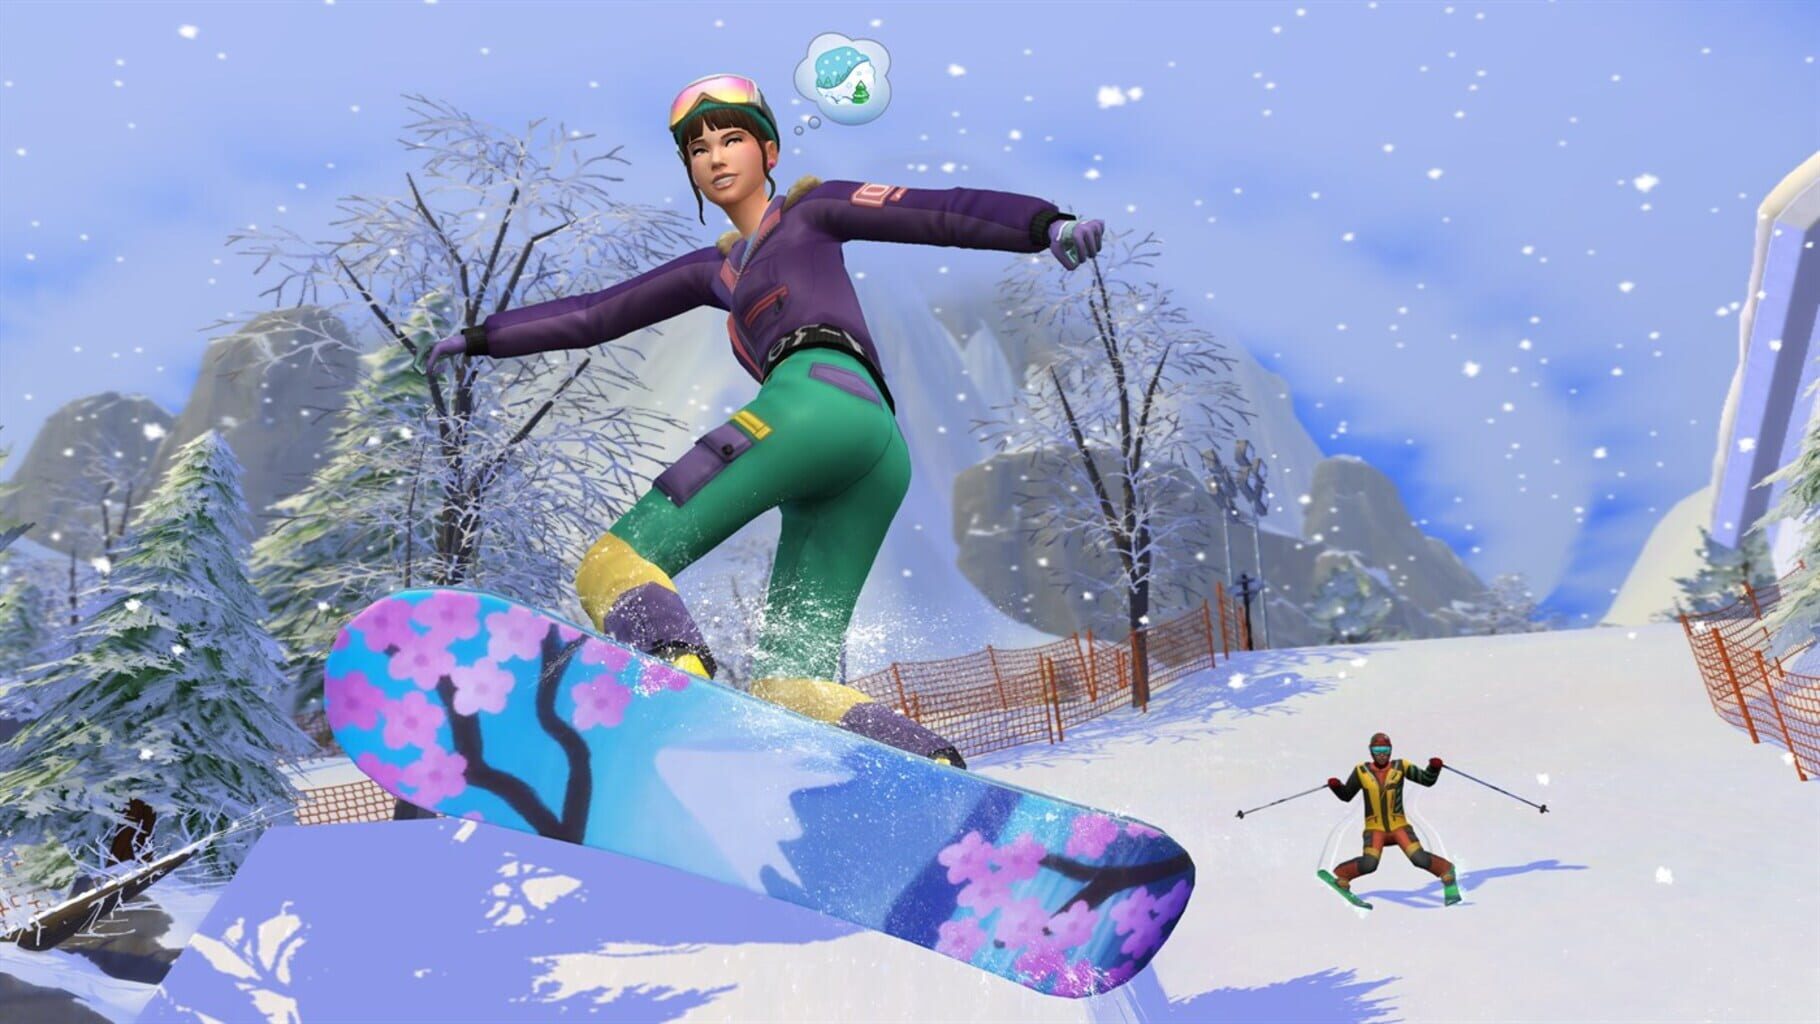 The Sims 4: Snowy Escape Image